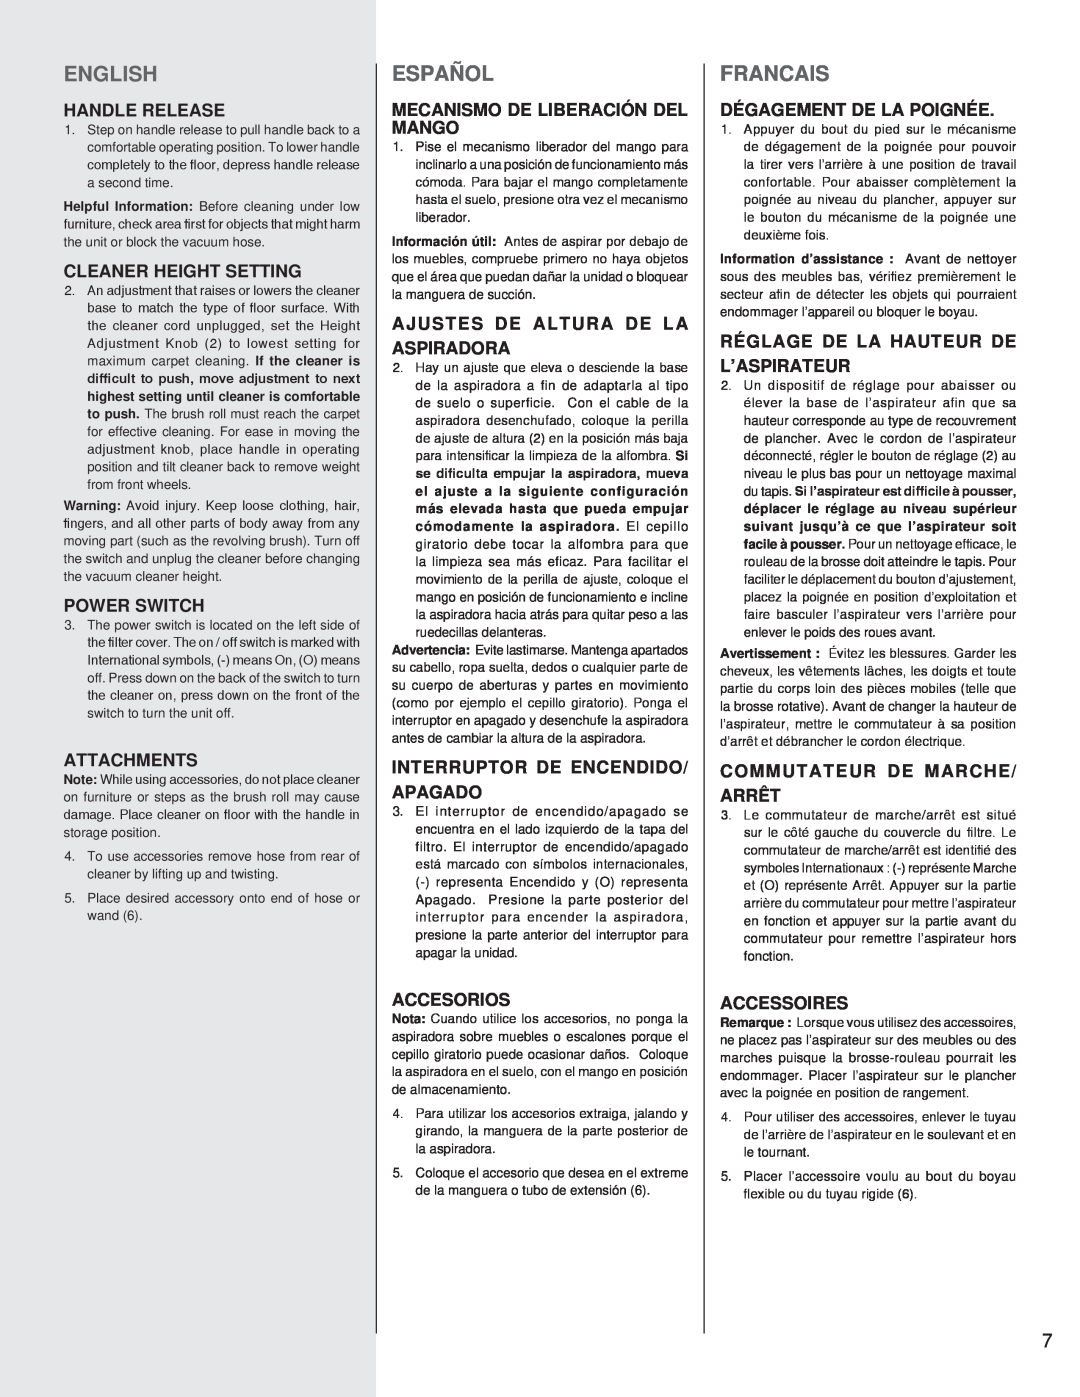 Electrolux SC5700/5800 SERIES warranty English, Español, Francais, Handle Release 